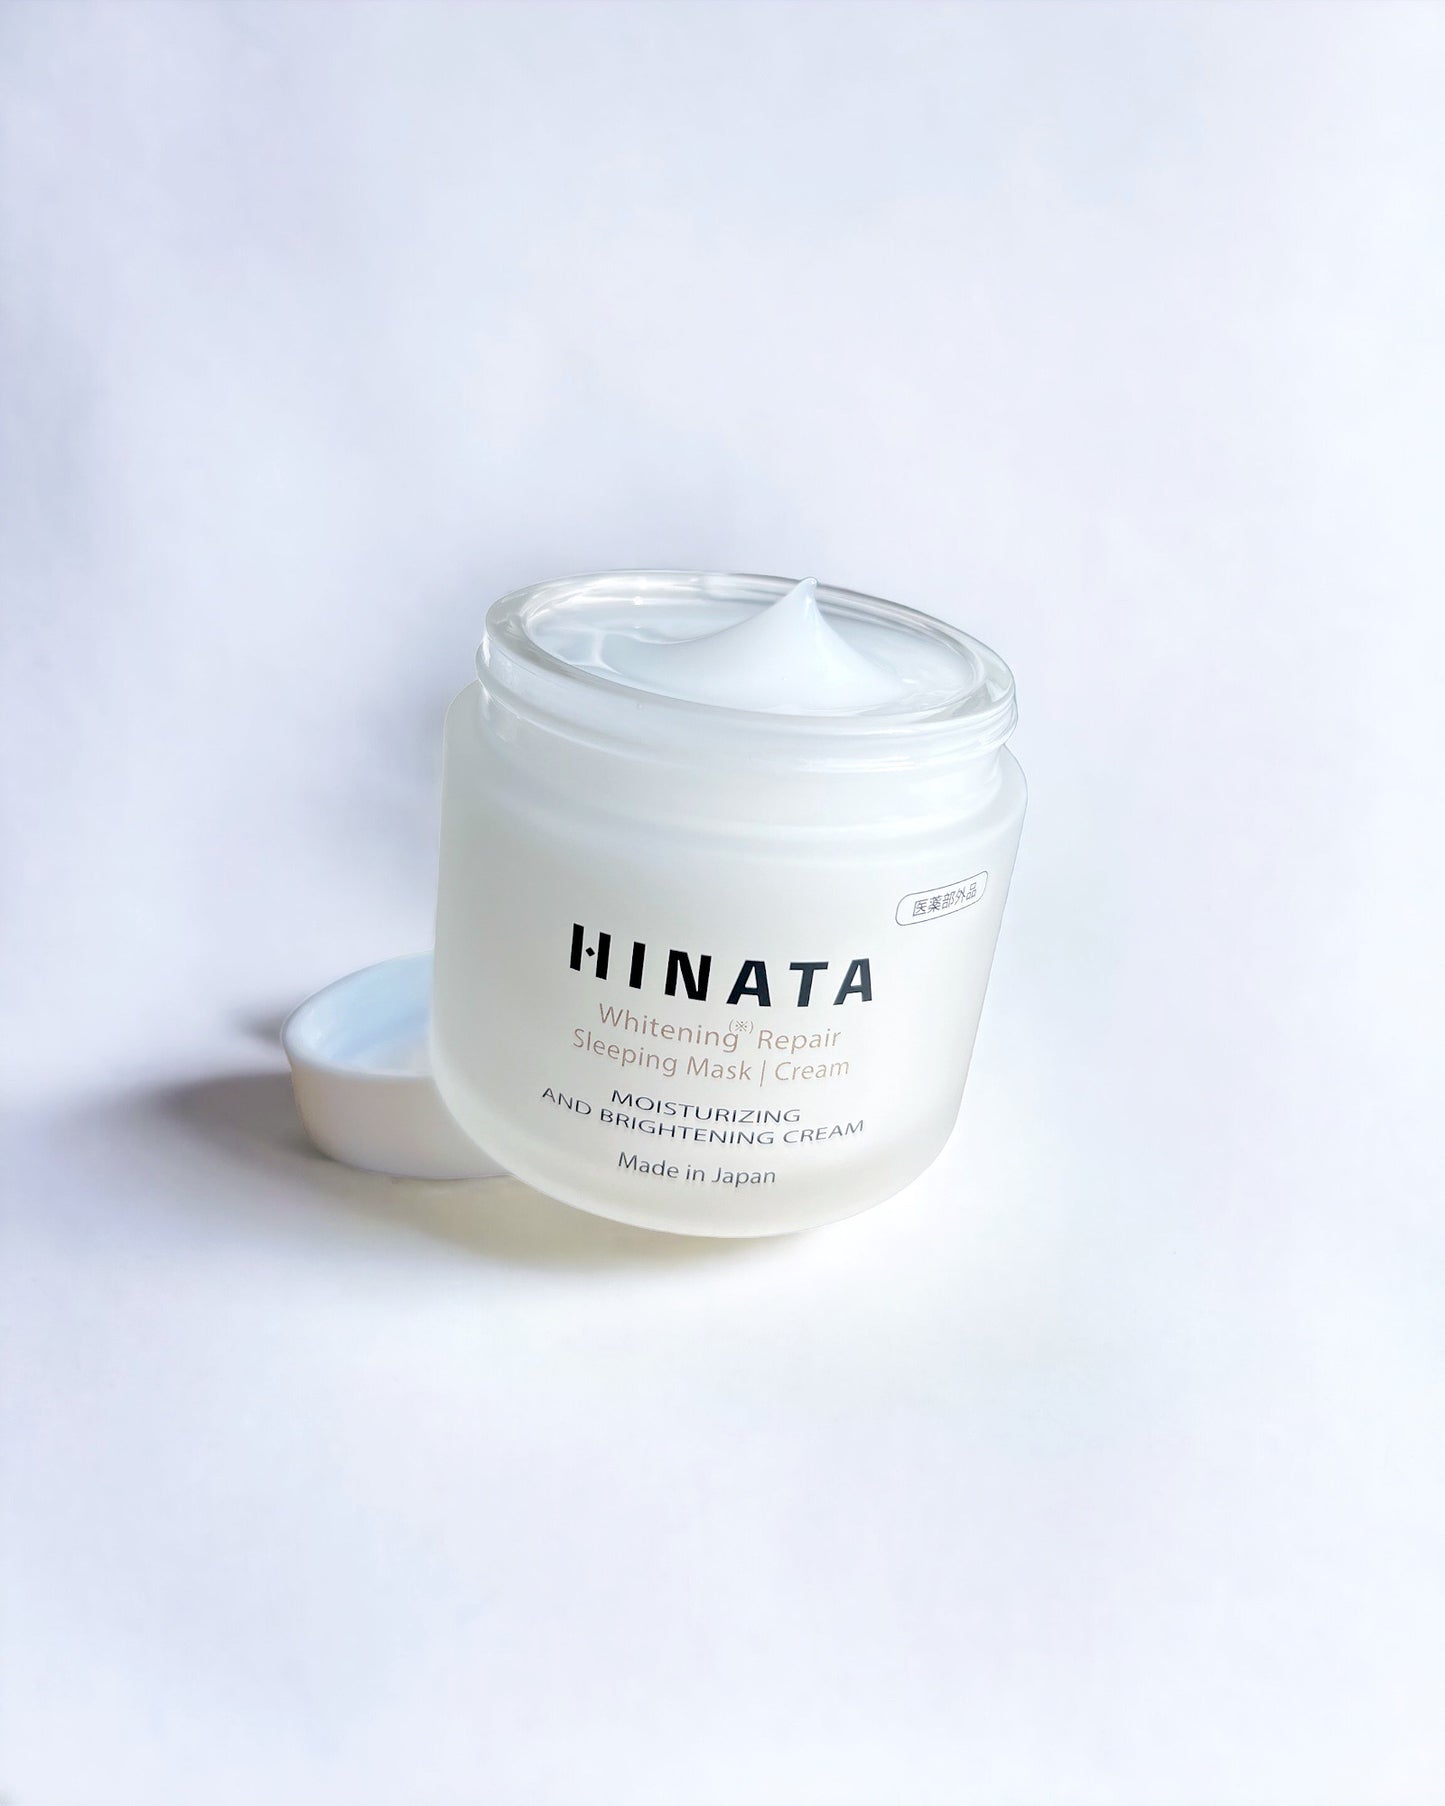 2. HINATA Whitening Repair Sleeping Mask | Cream: Prevent future (black) spots with placenta whitening